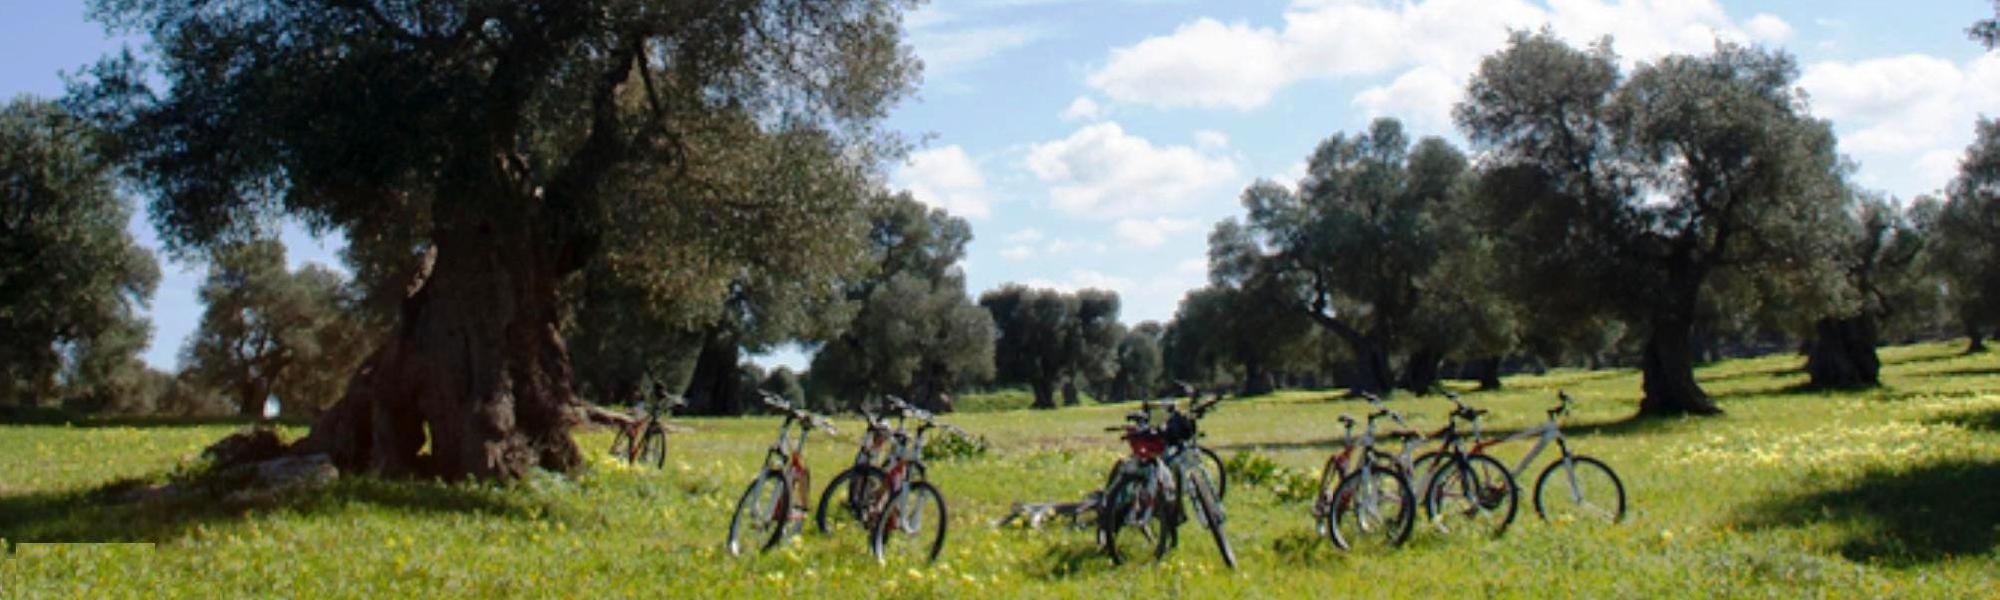 Puglia Bike - Cycling Tour in nature of the Apulia - Agriturismo Salento 0